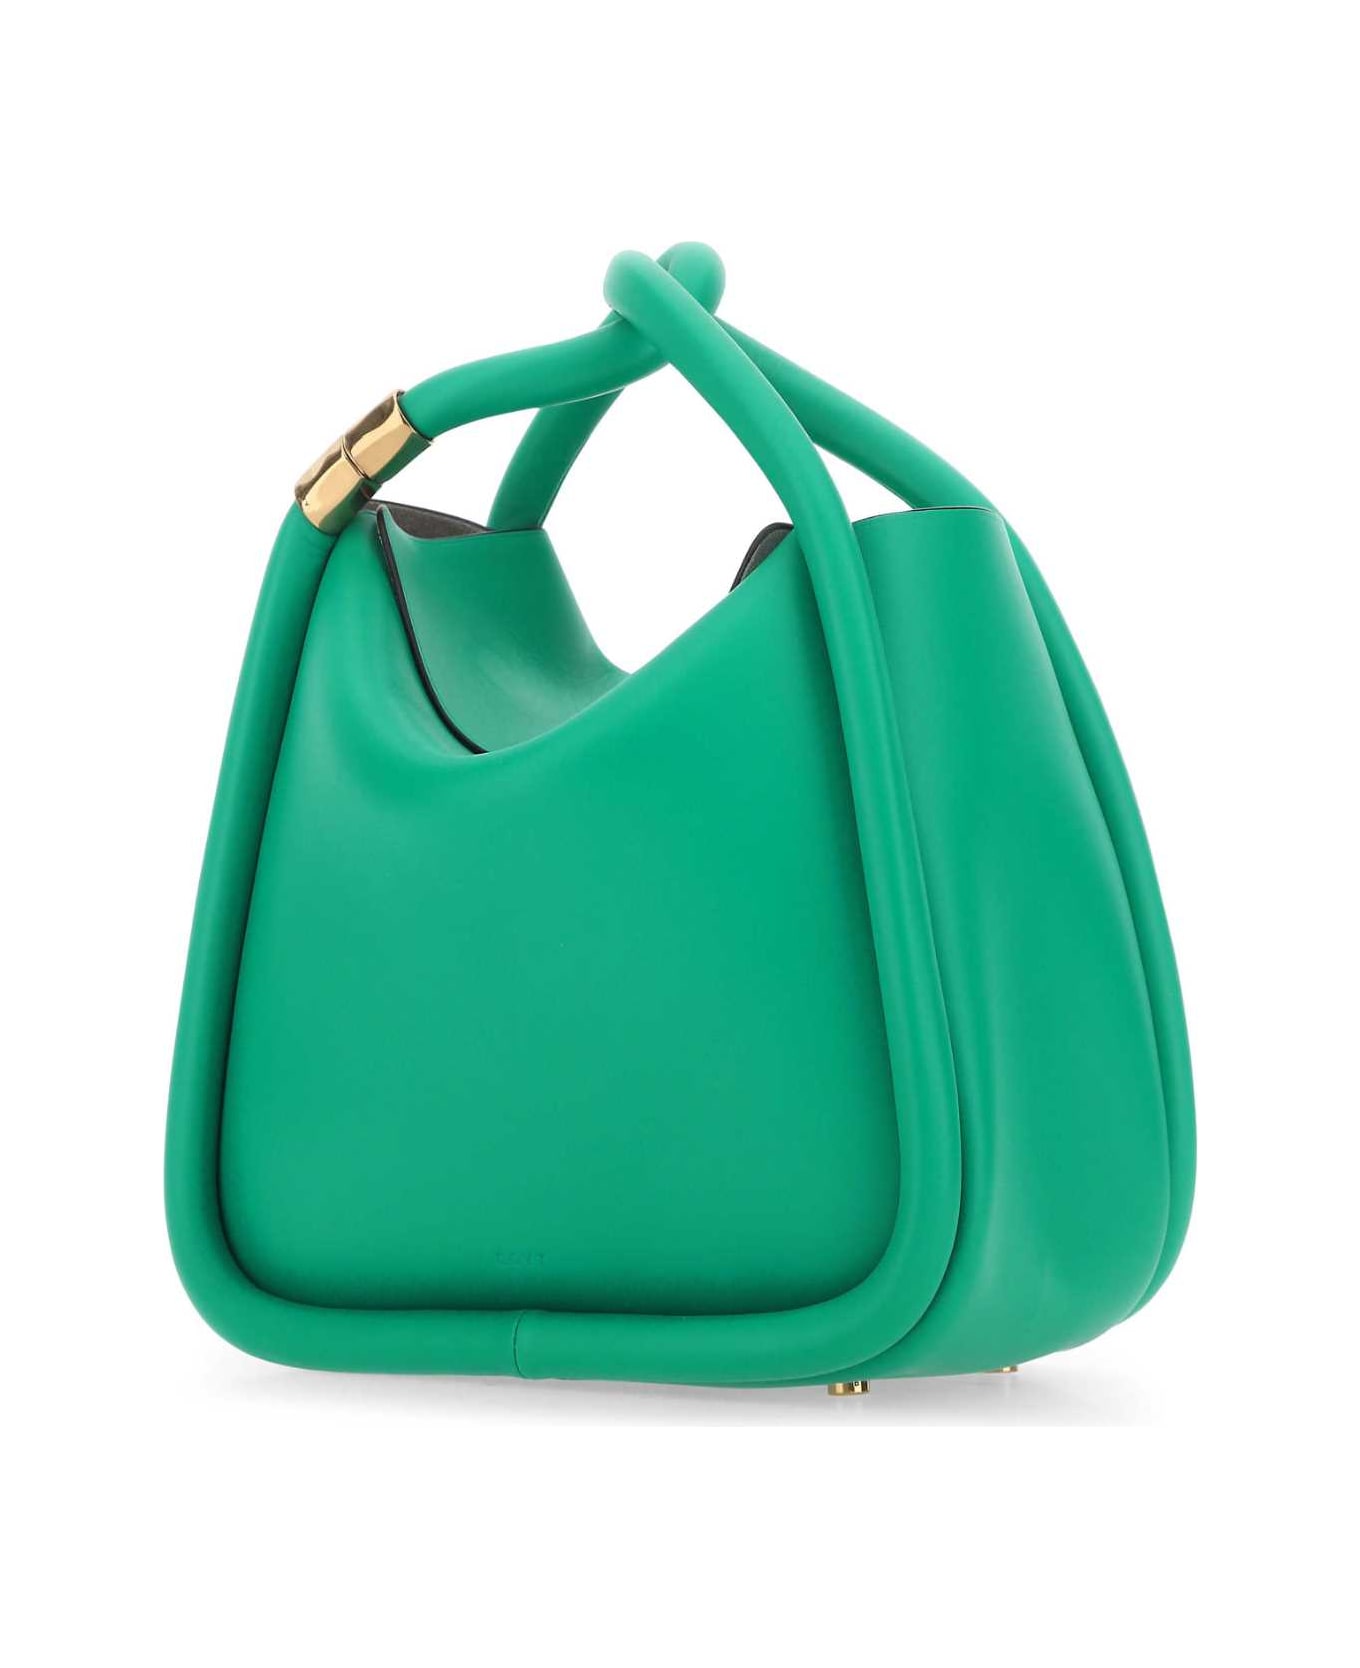 BOYY Emerald Green Leather Wonton 25 Handbag - EMERALD